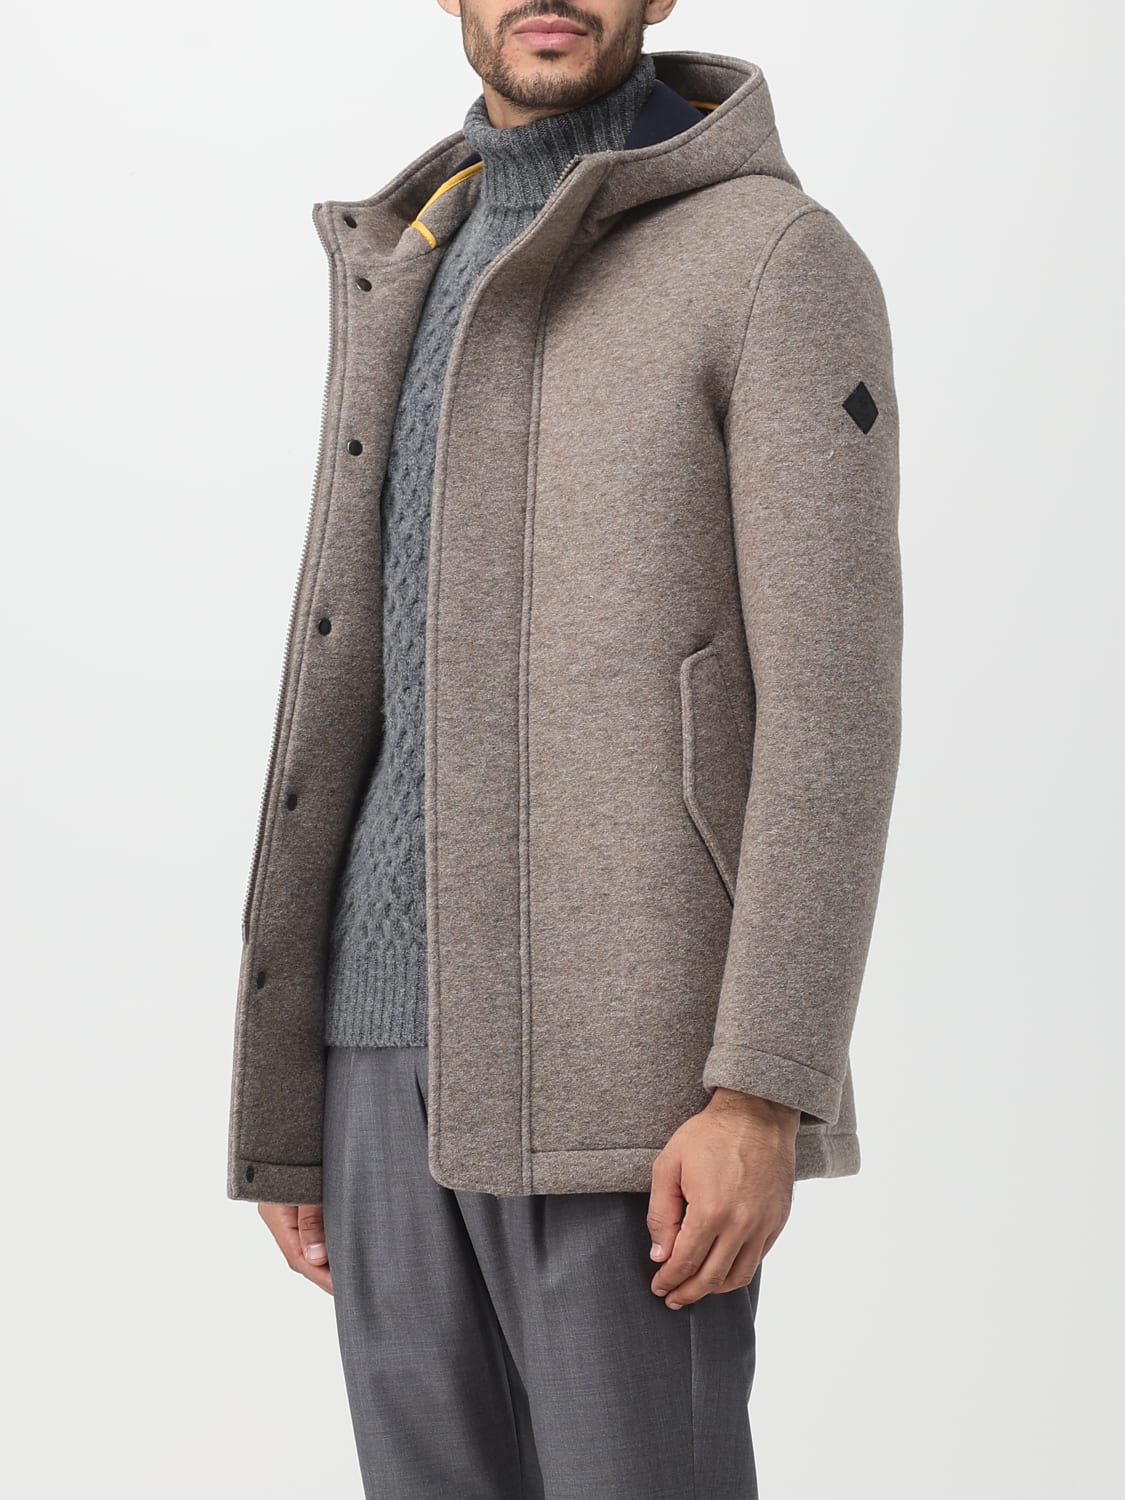 Manuel Ritz checked hooded jacket - Grey